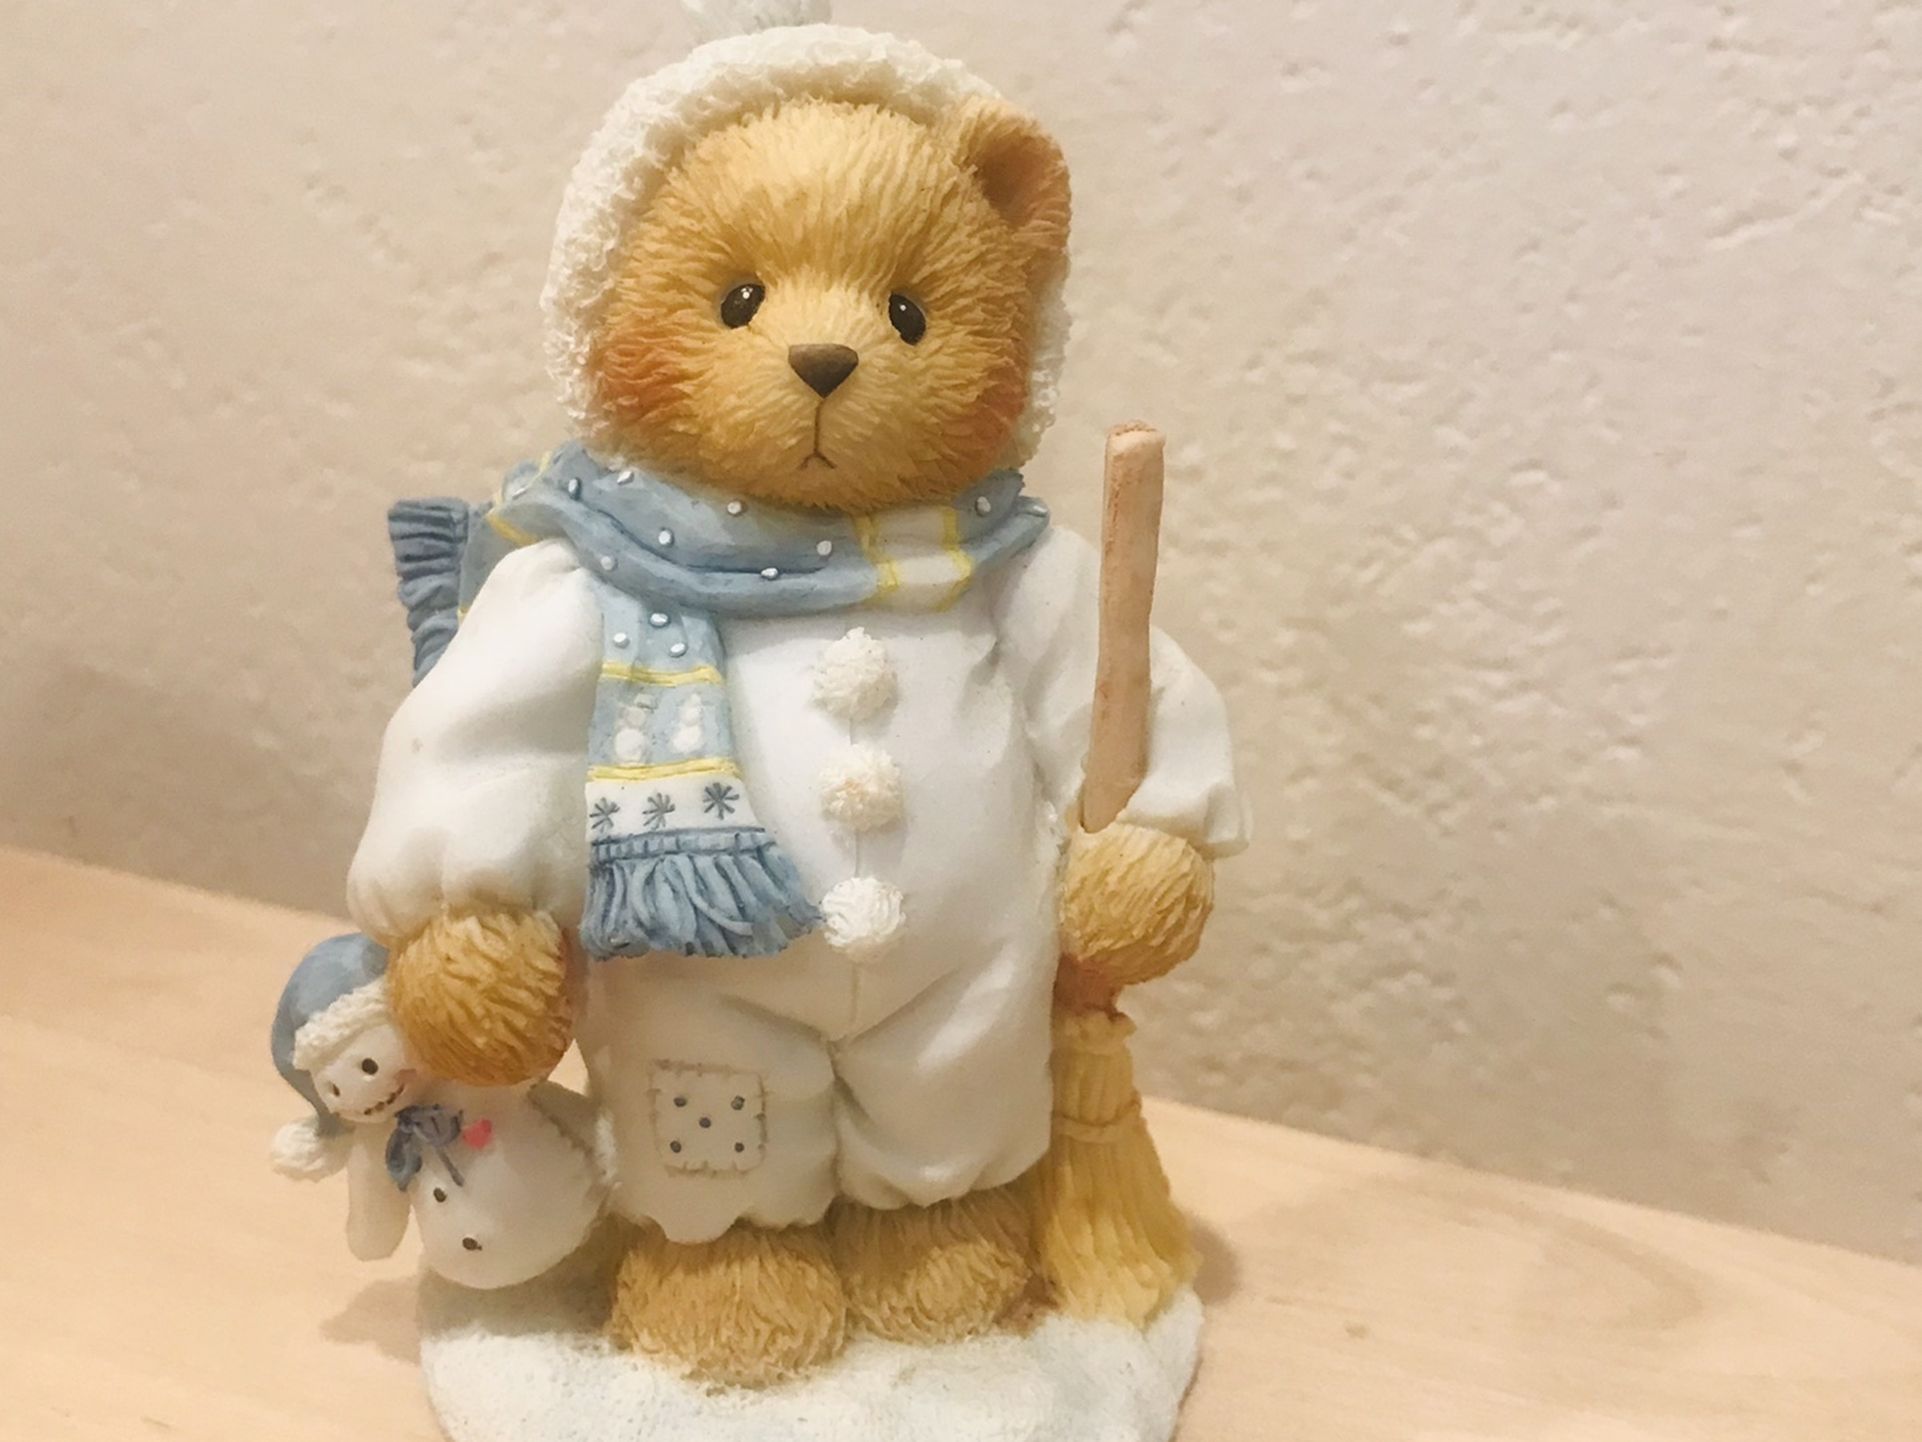 Enesco Cherished Teddies "Earl" Warm Hearted Friends Christmas  bear figurine 